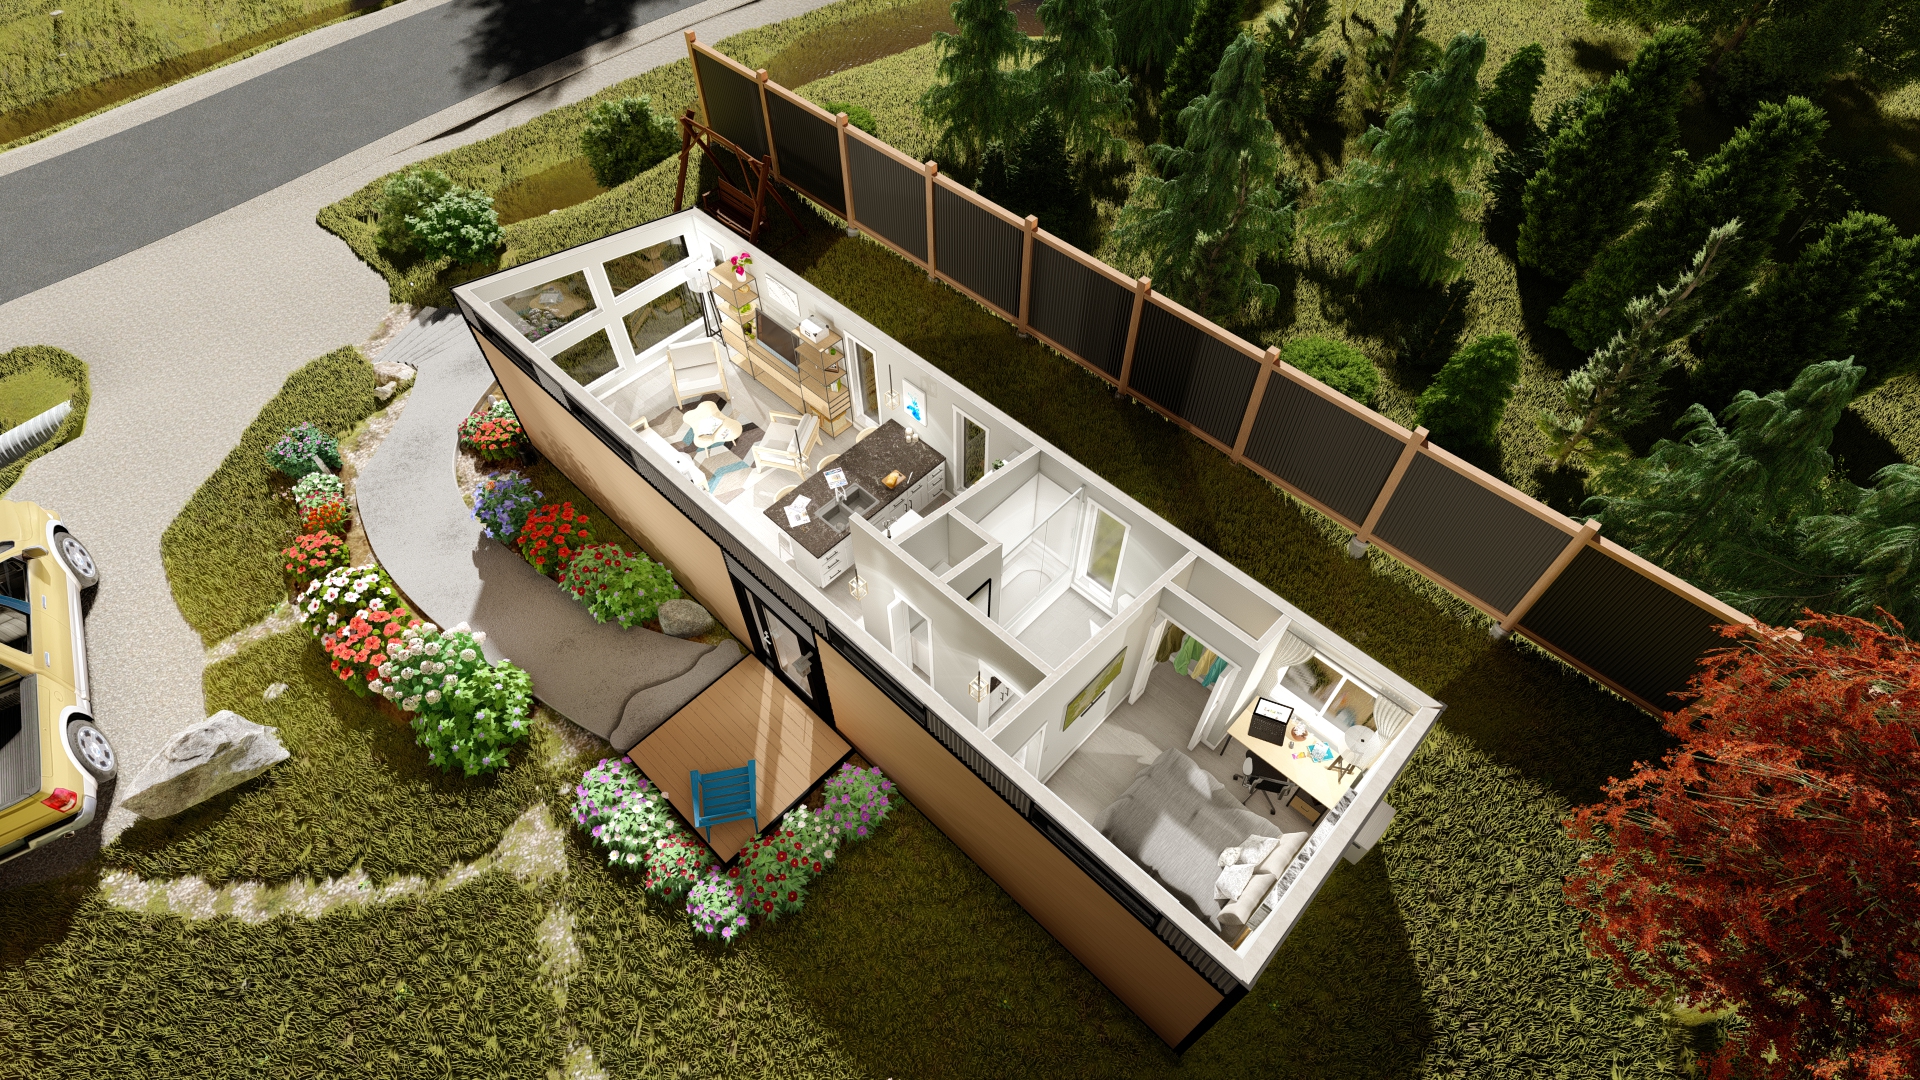 The Dovetail - 2 Storey Modular Home